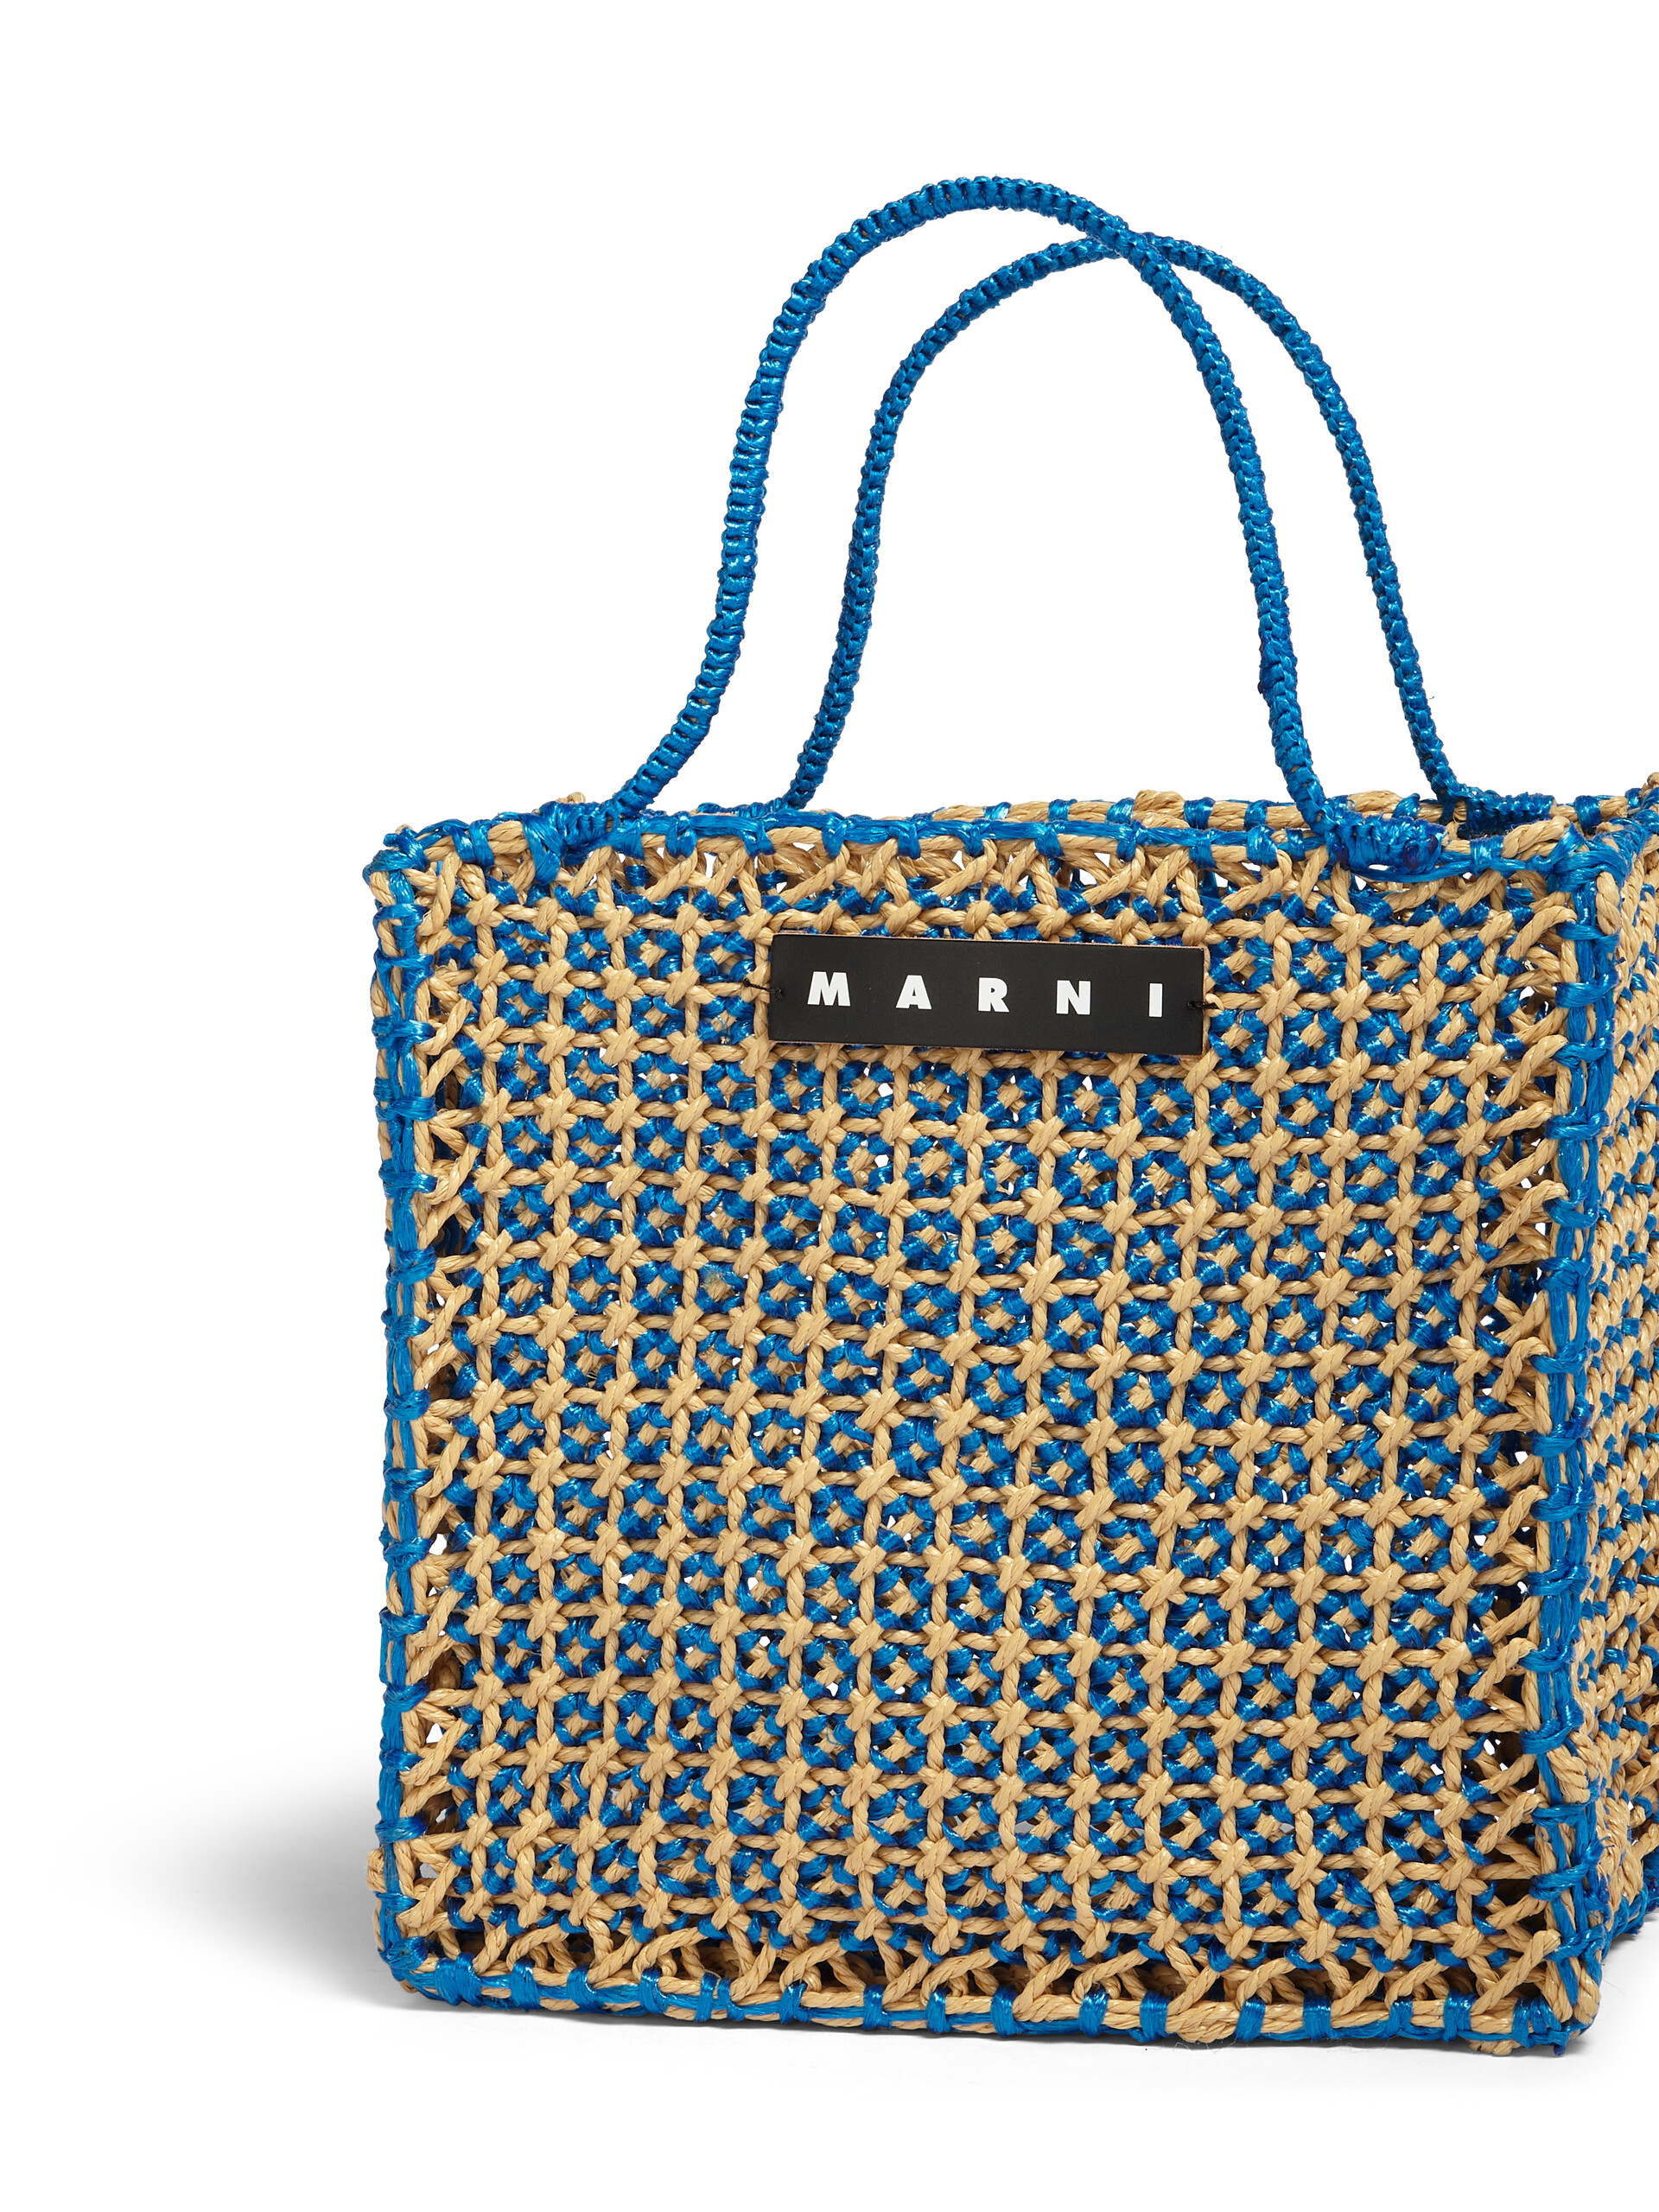 MARNI MARKET MINI JURTA bag in red yellow and green crochet - Shopping Bags - Image 4